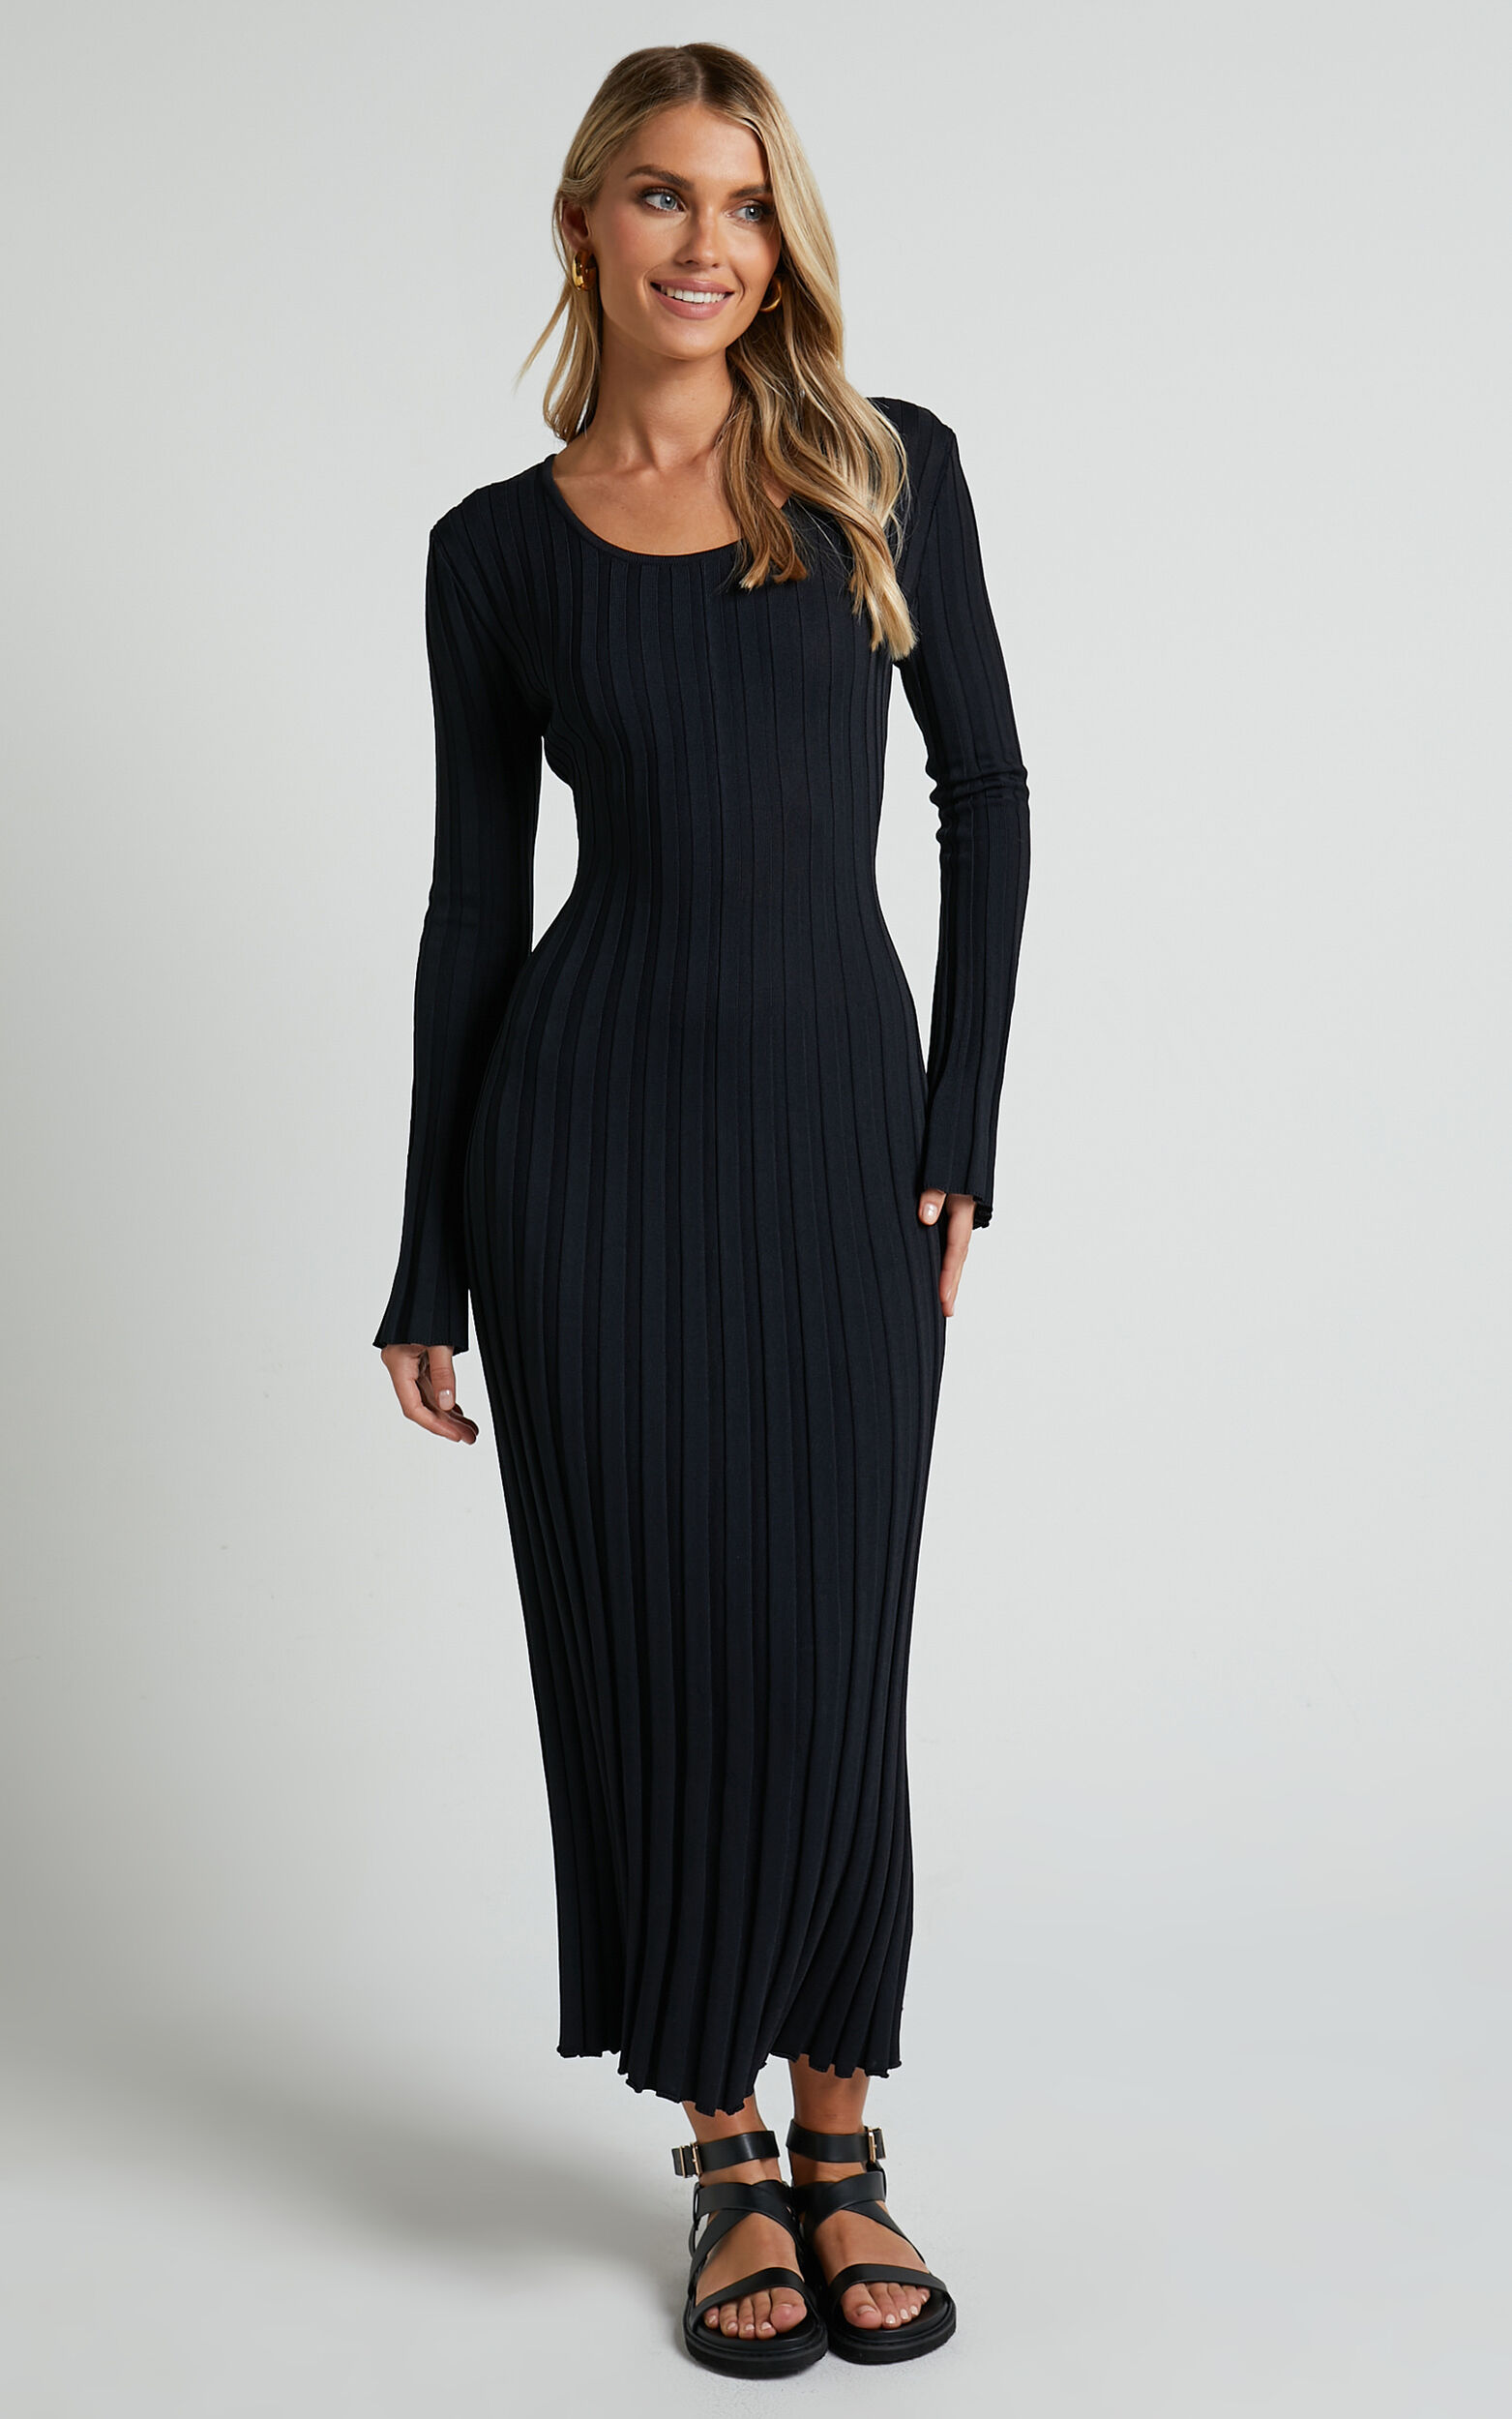 Blaire Midi Dress - Long Sleeve Tie Back Flare Dress in Black - 06, BLK1